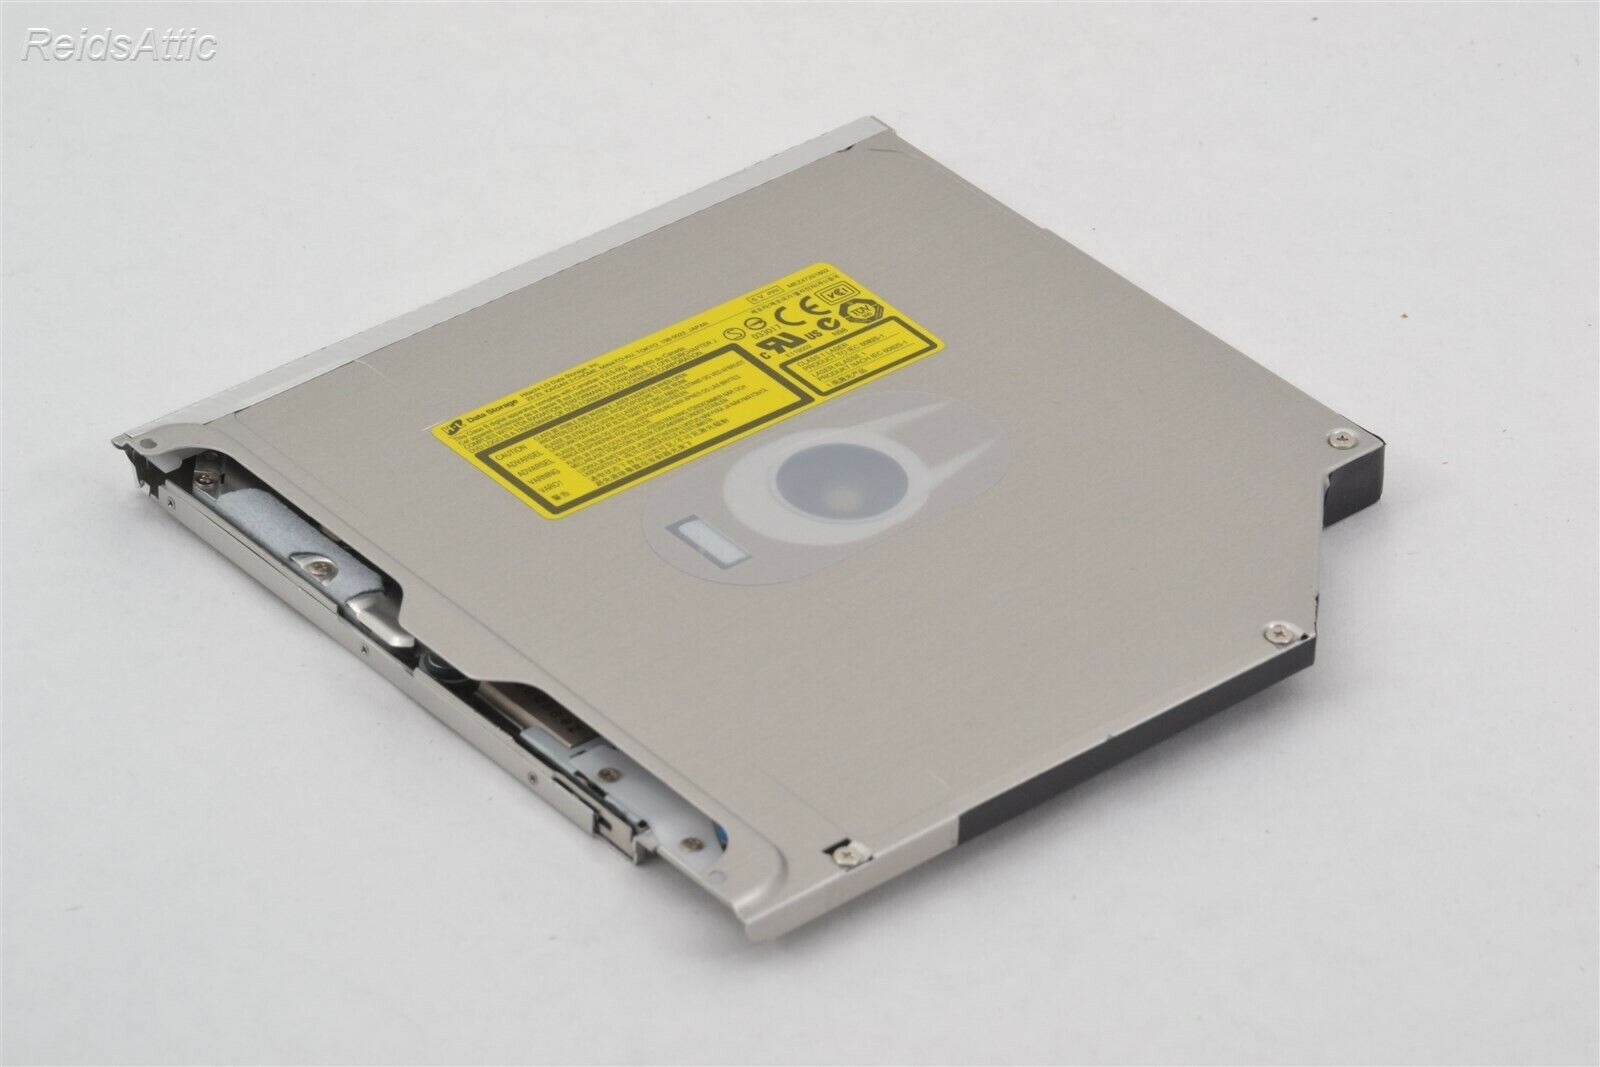 Apple OEM Hitachi LG DVD Optical Super Drive 678-0612 GS31N for Macbook Pro